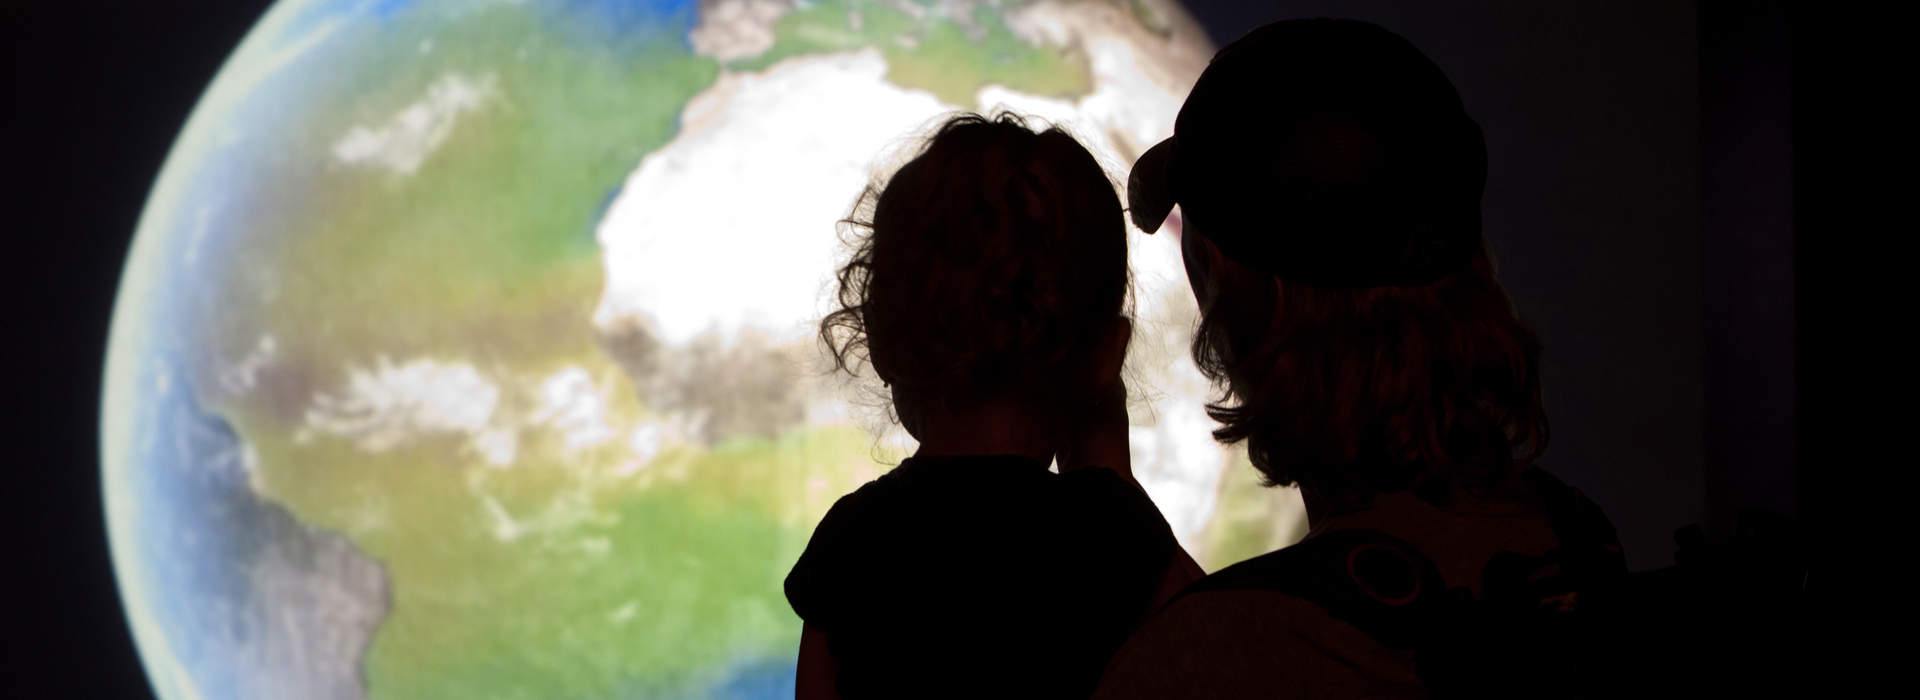 Parent and Child observe NASA display exhibit at the Arizona-Sonora Desert Museum